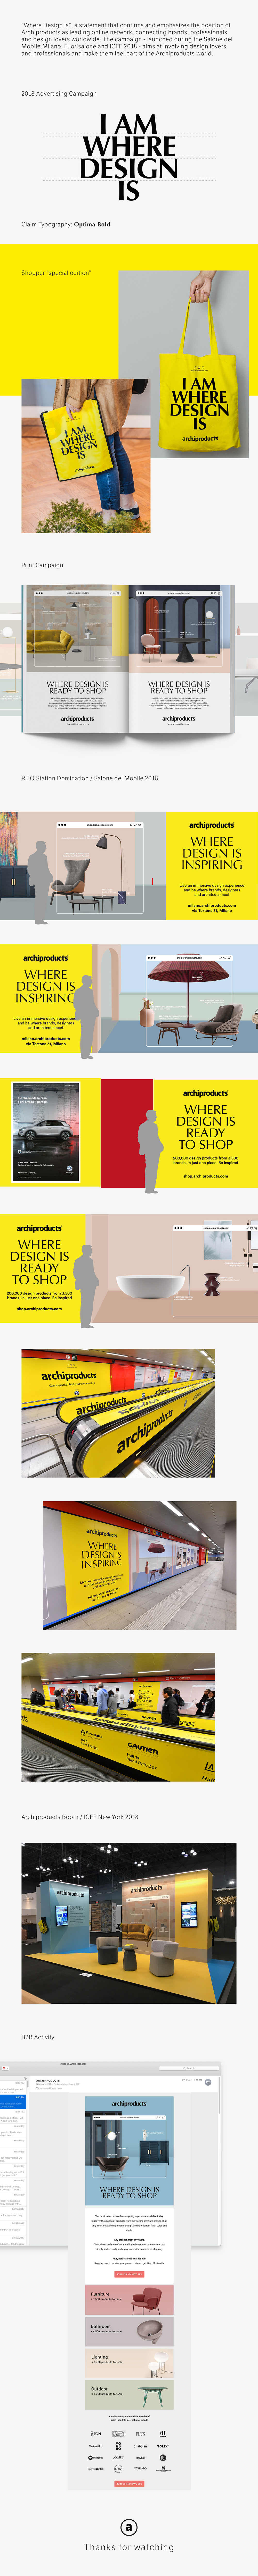 where design is archiproducts graphic branding  campaign brand identity design yellow salone del mobile fuorisalne